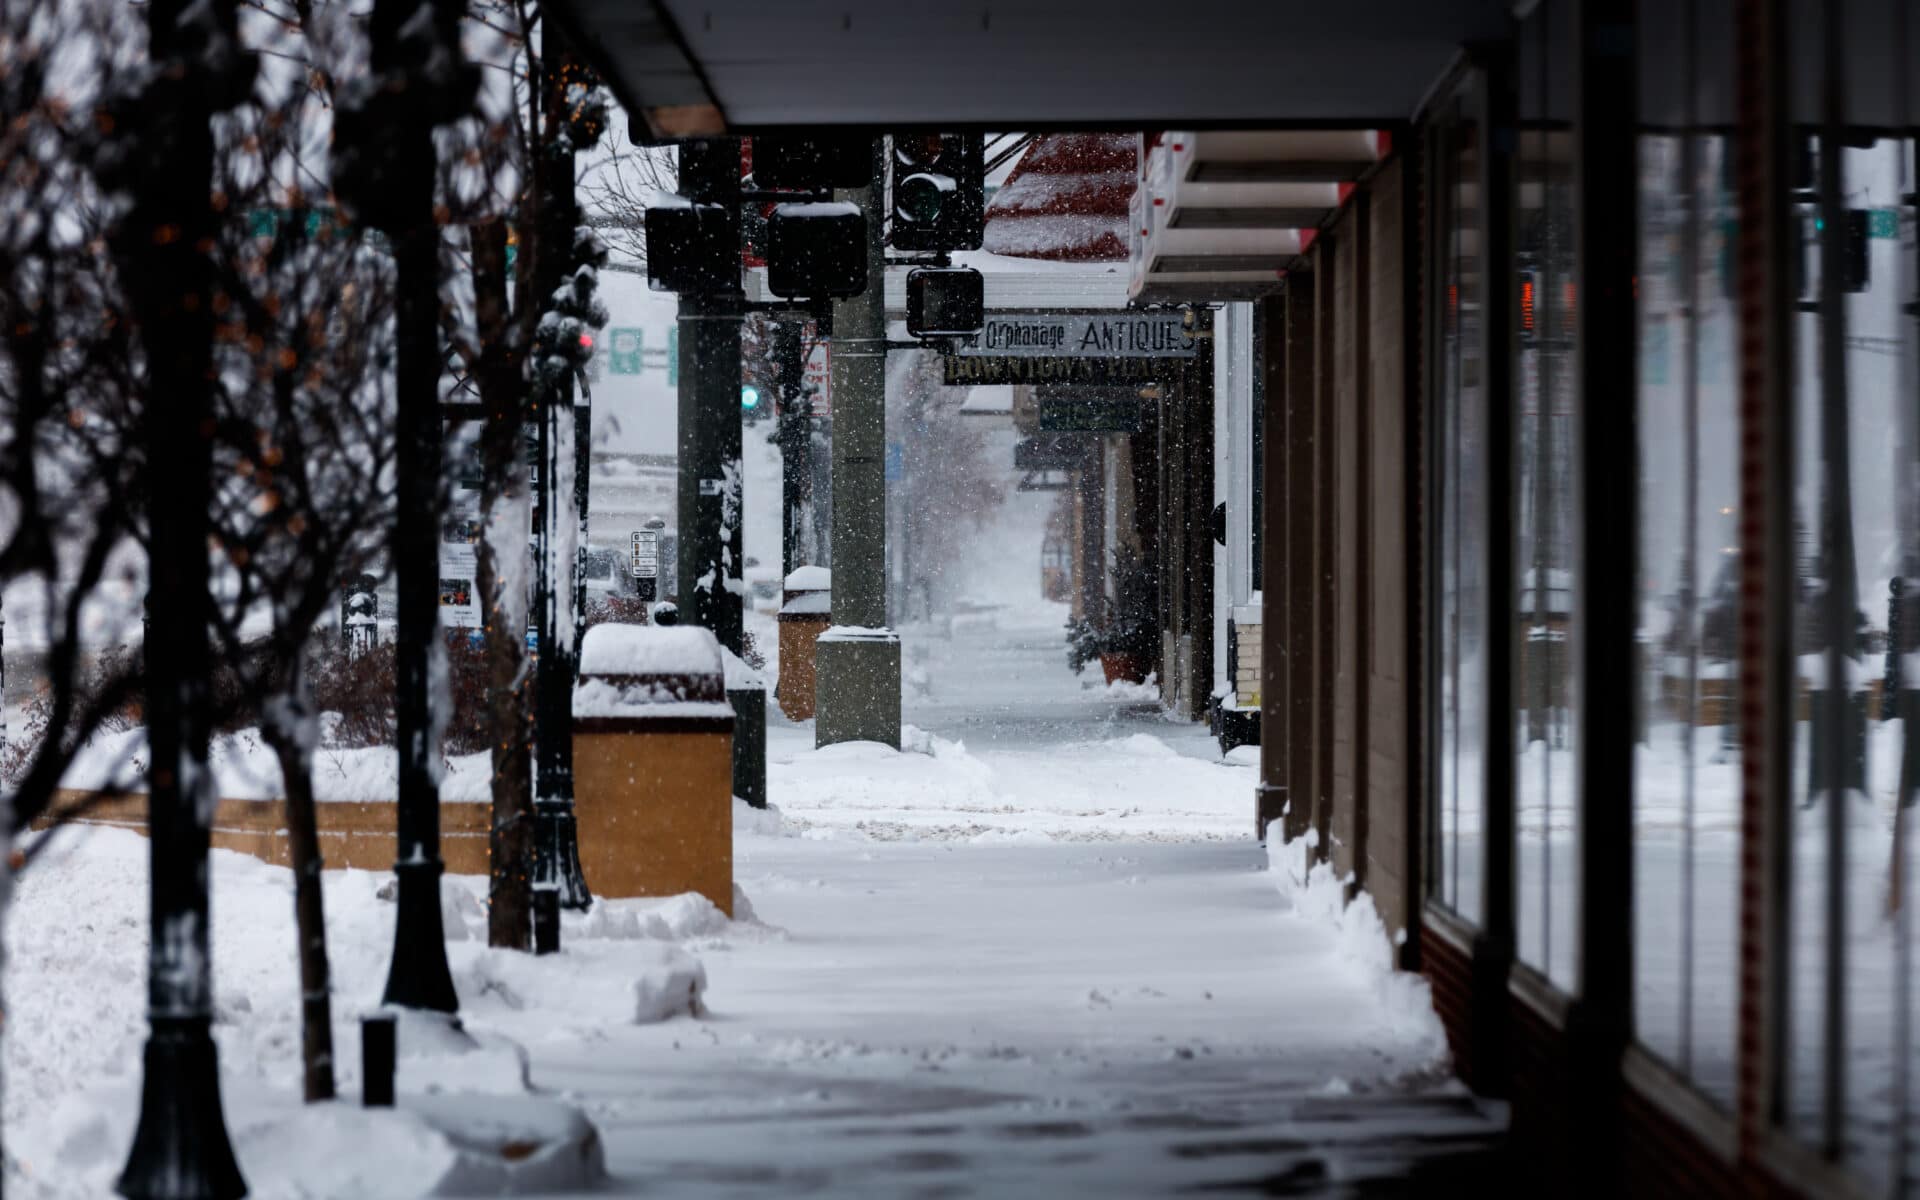 Downtown Marshall with Snowy sidewalks